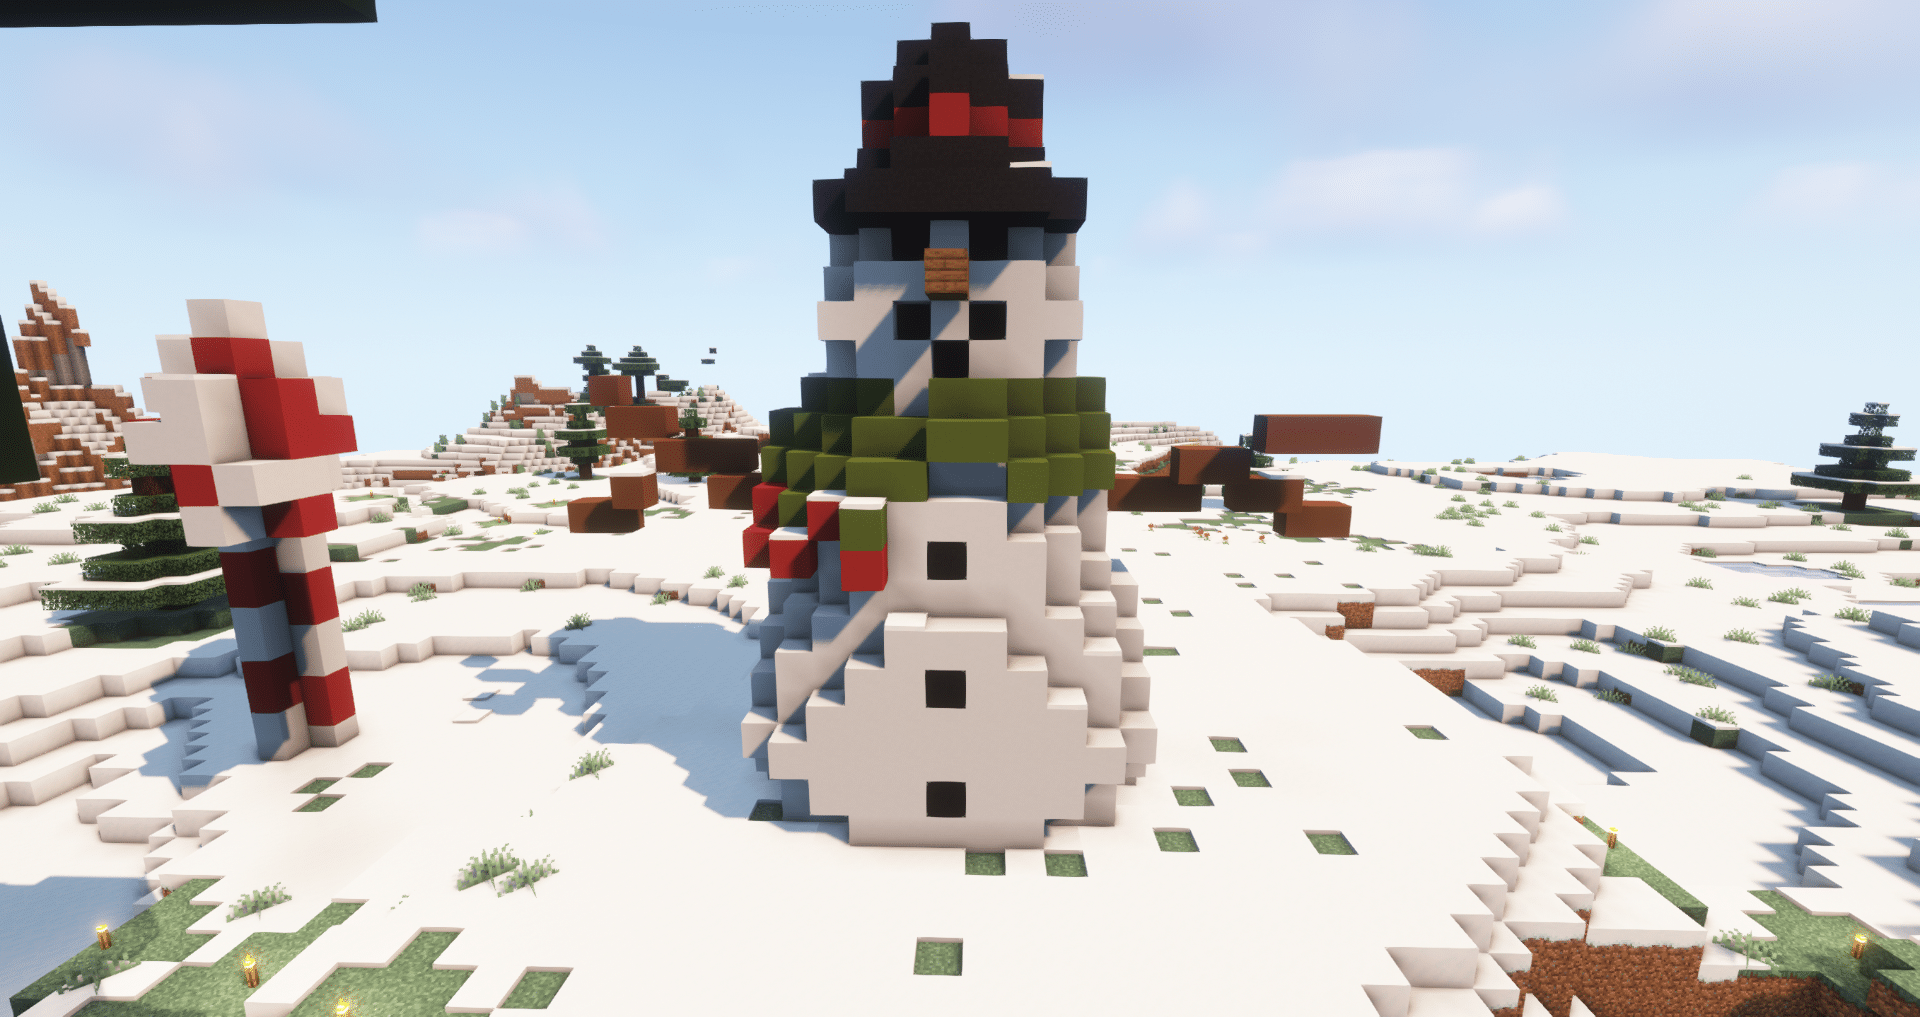 Building a Snowman in Minecraft